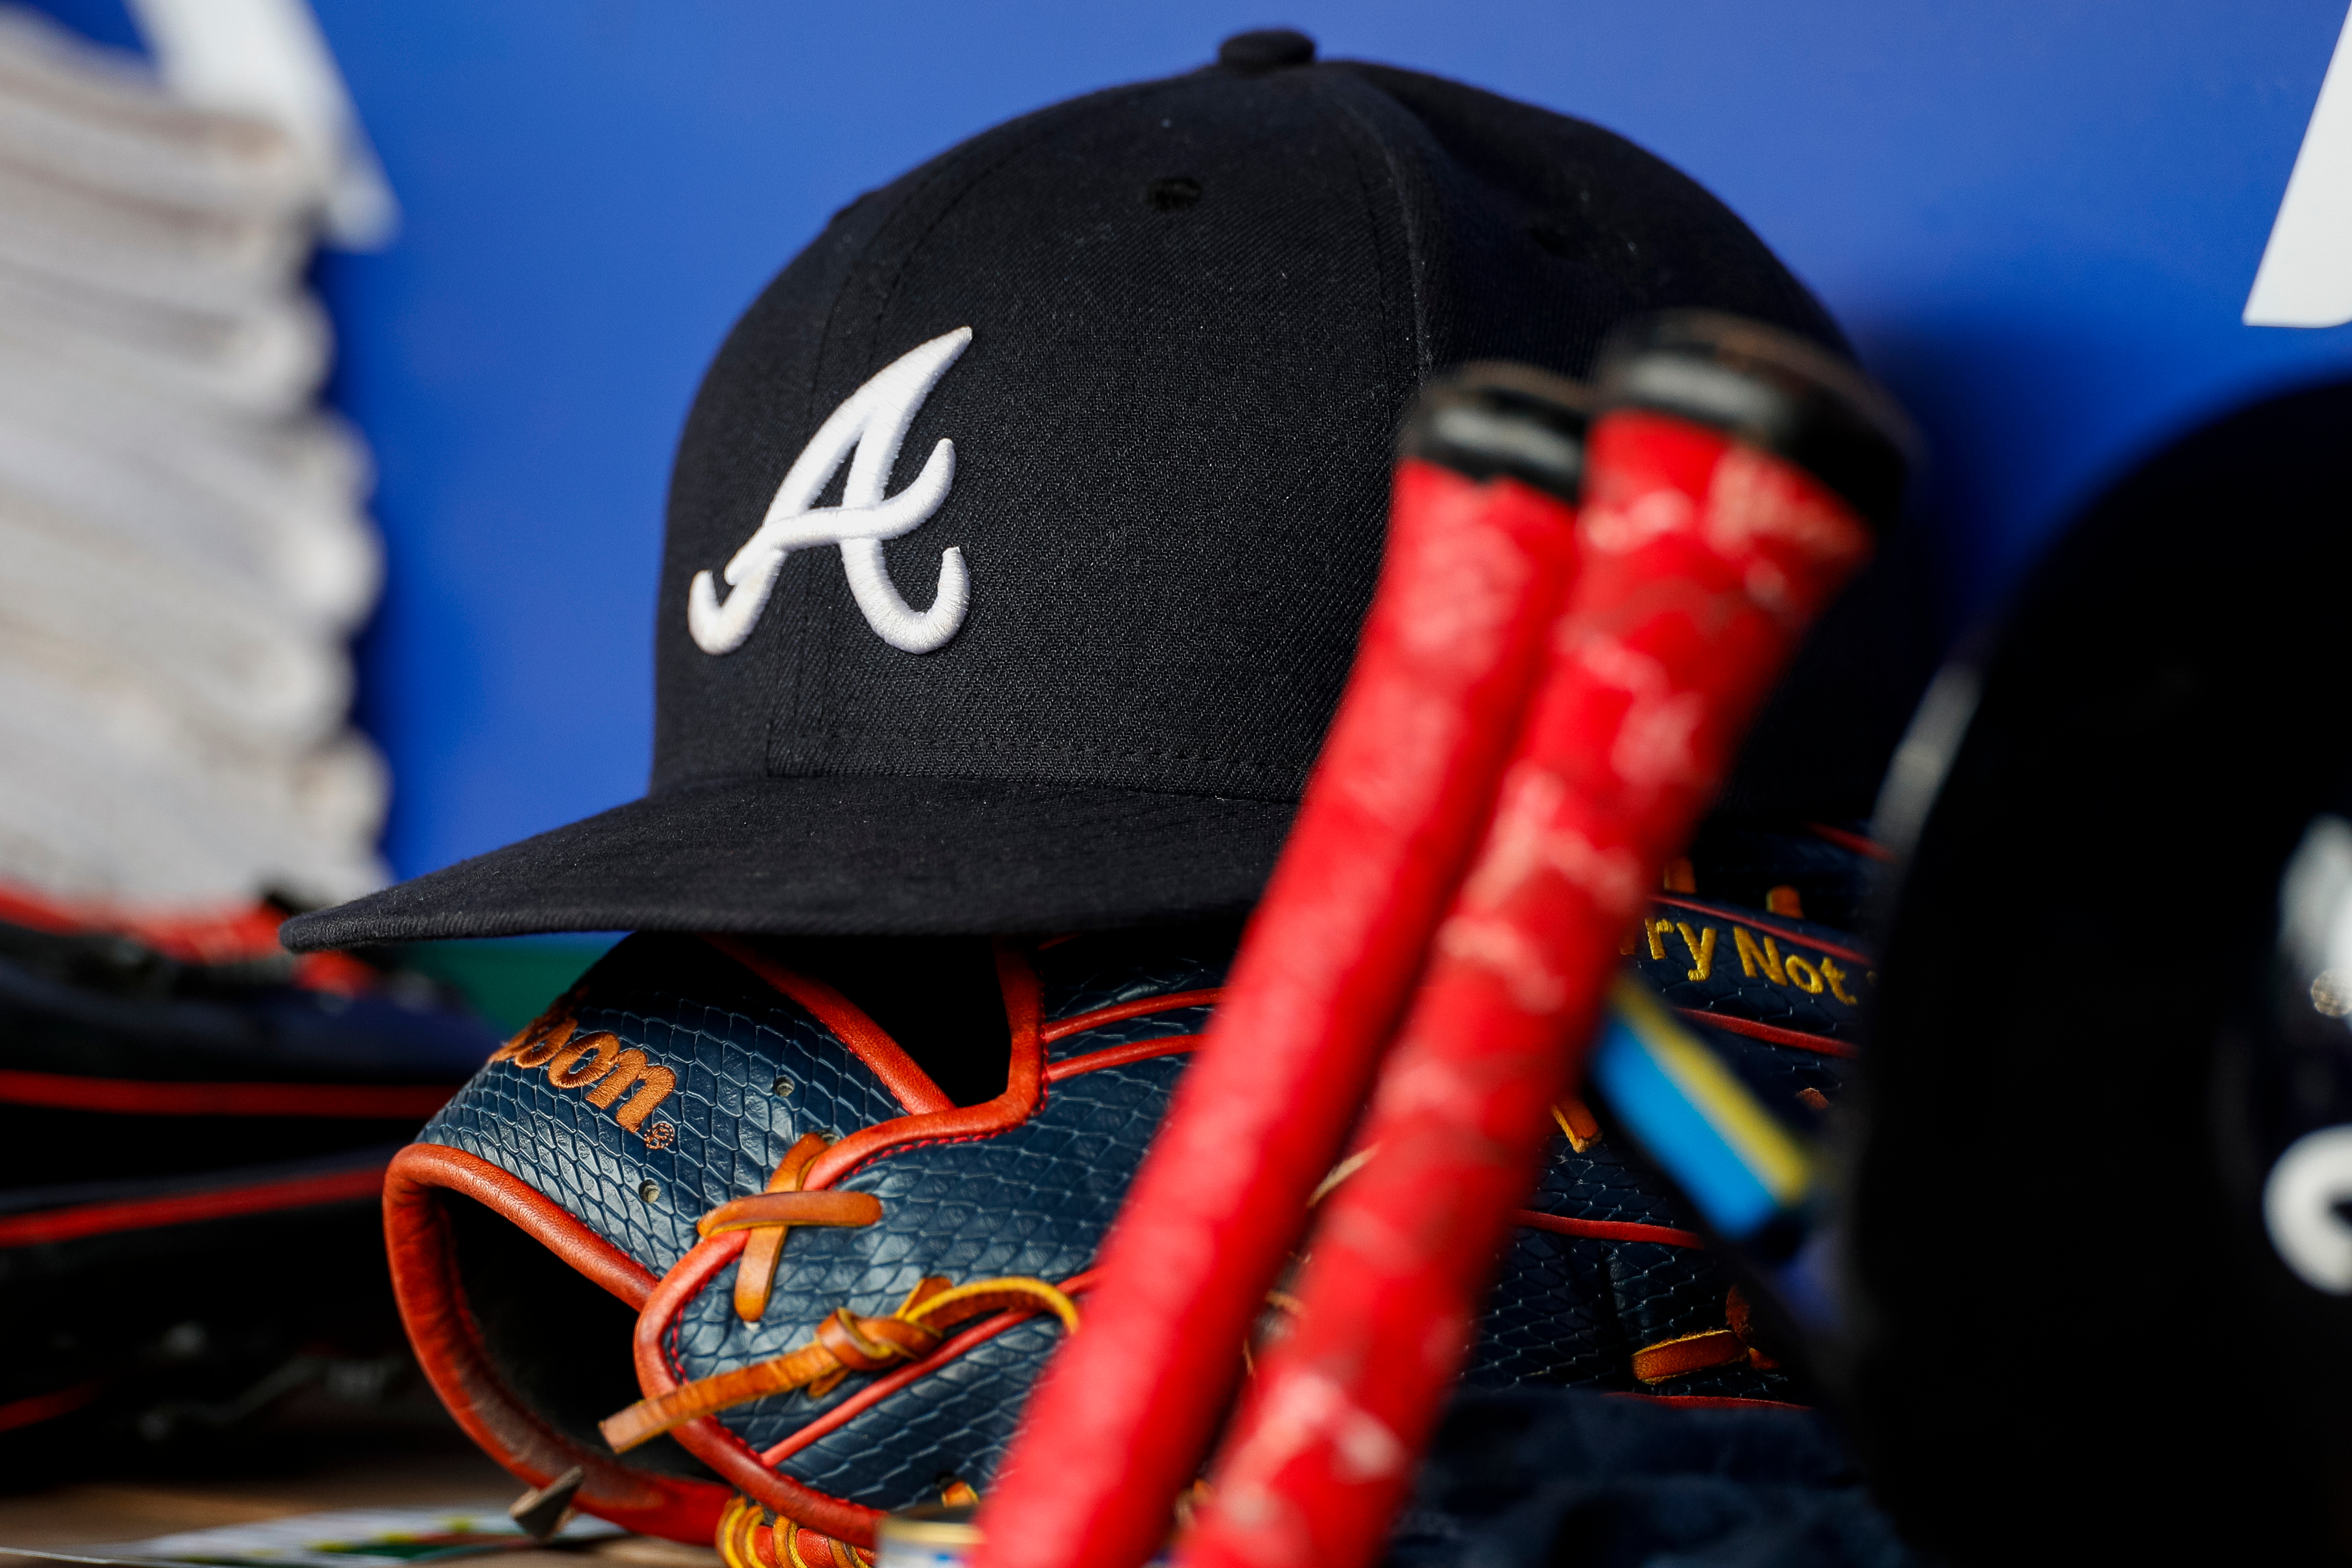 Dansby Swanson of the Atlanta Braves: Savior or suspect? - Minor League Ball